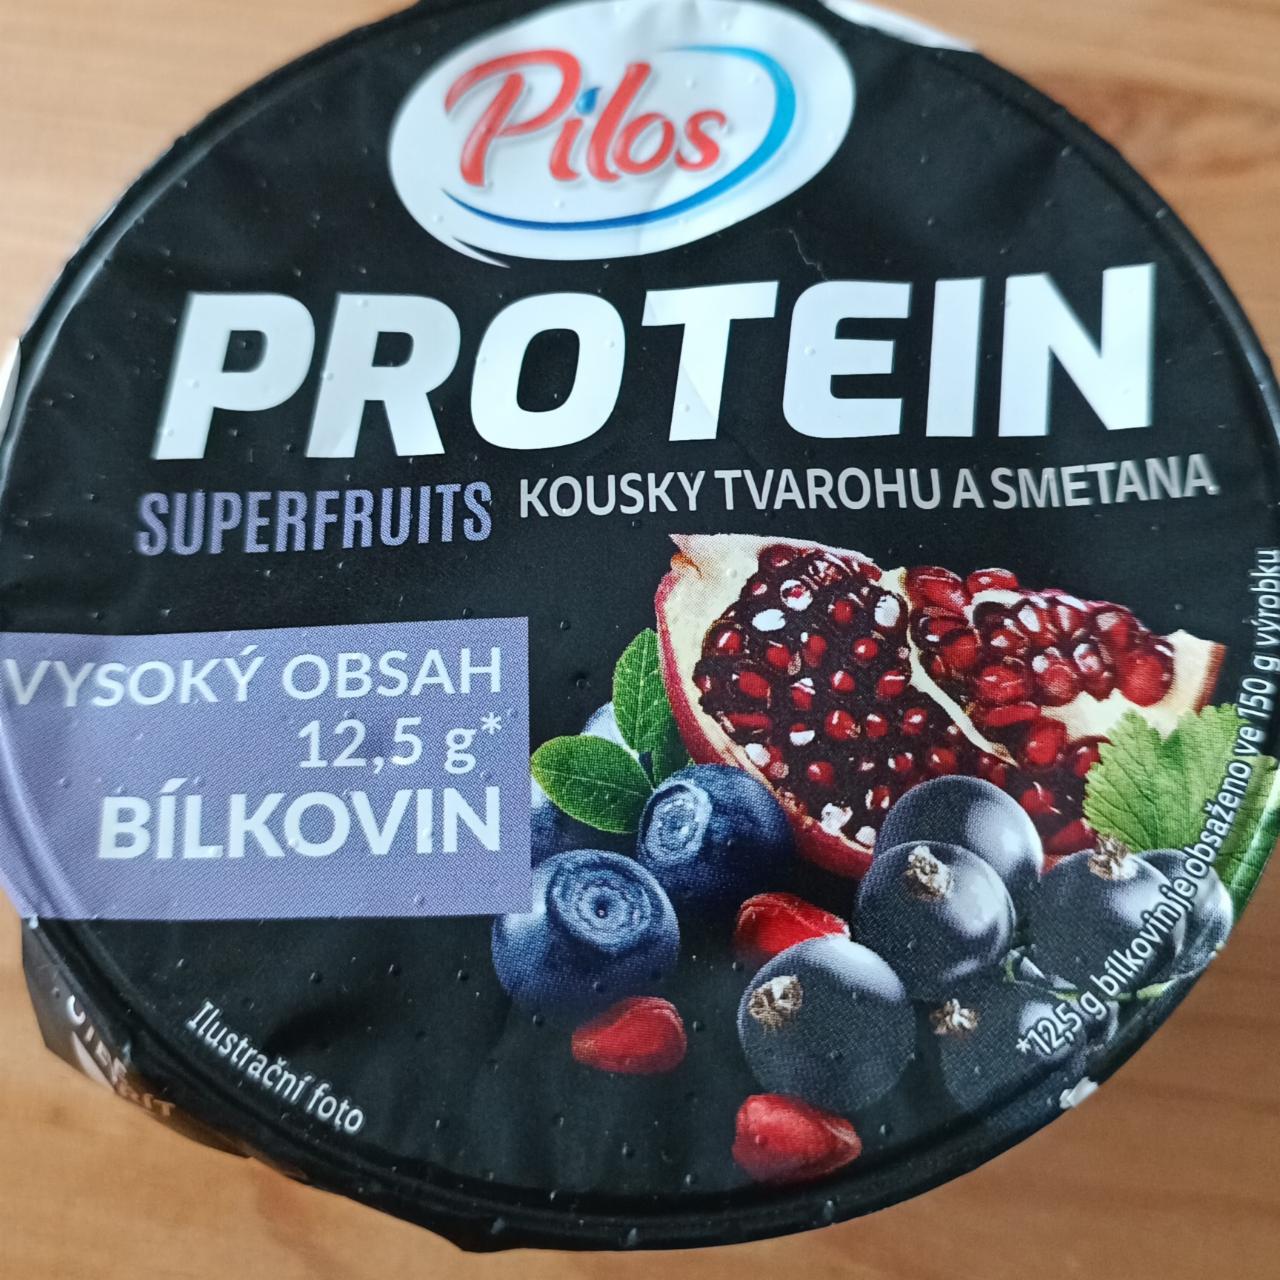 Fotografie - Protein Superfruits kousky tvarohu a smetana Pilos